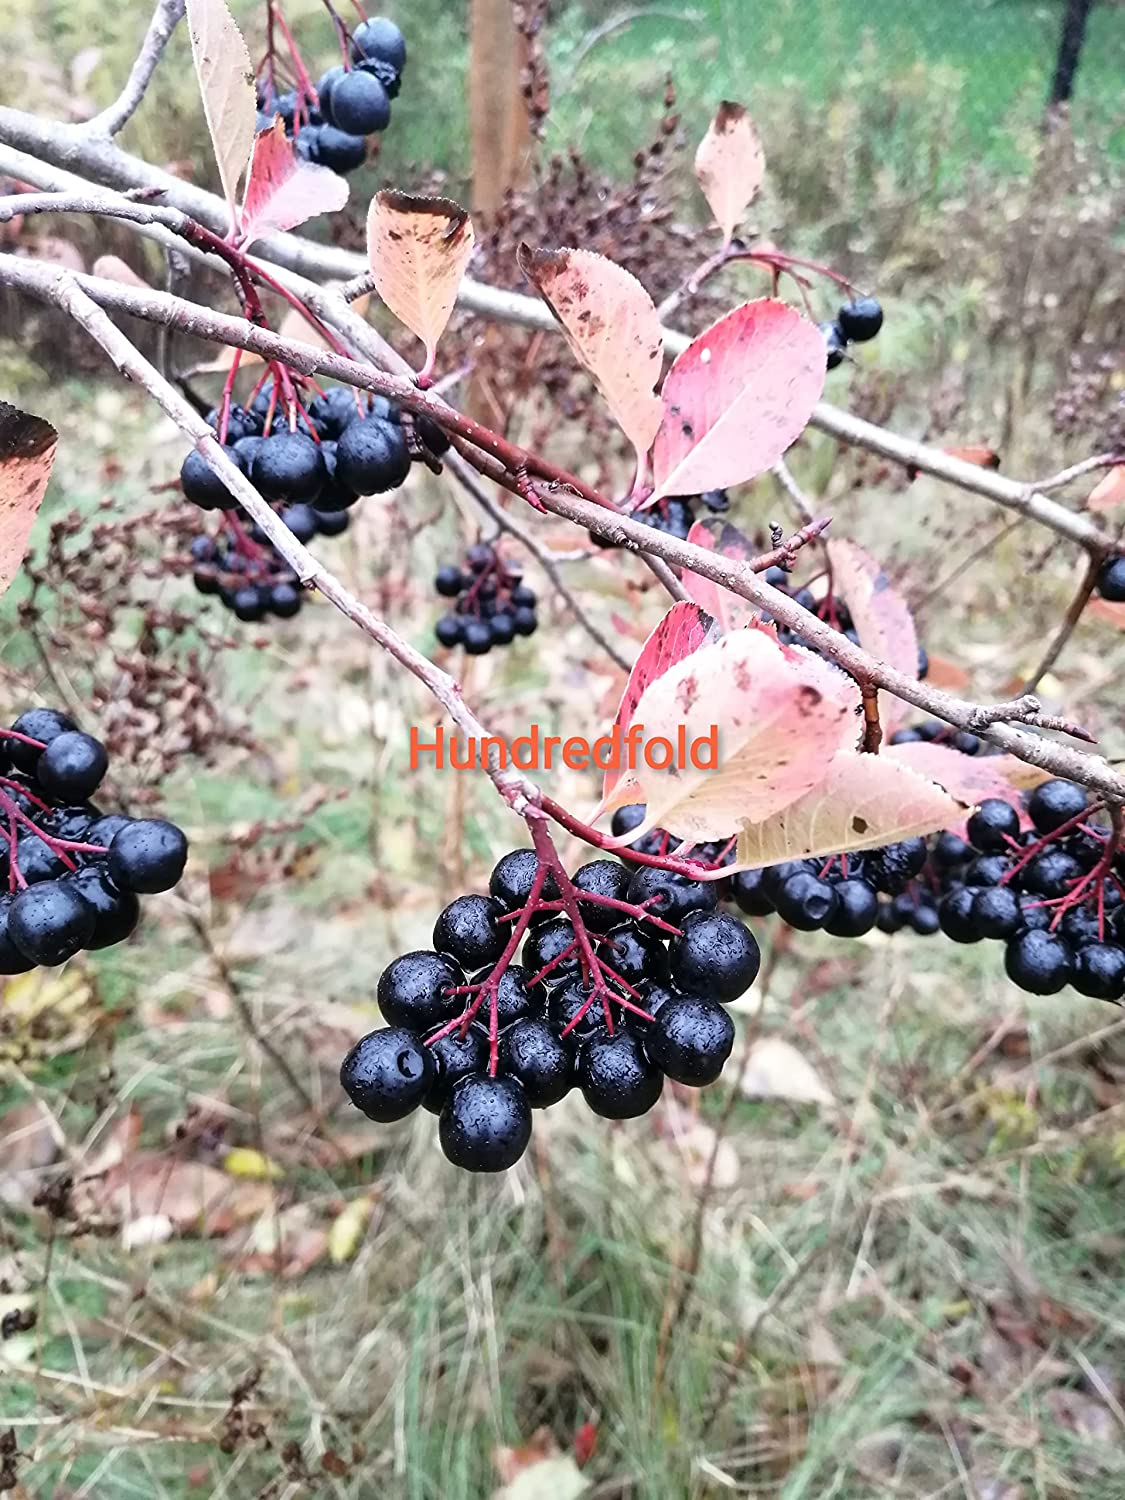 Hundredfold 20 Black Chokeberry Seeds – Aronia melanocarpa Aronia Berries Adaptive Canadian Native Shrub, for Landscaping, Erosion Control, Windbreak or Backyard Fruit Tree, Producing High Antioxidant Fruits, Packed and Shipped in Canada